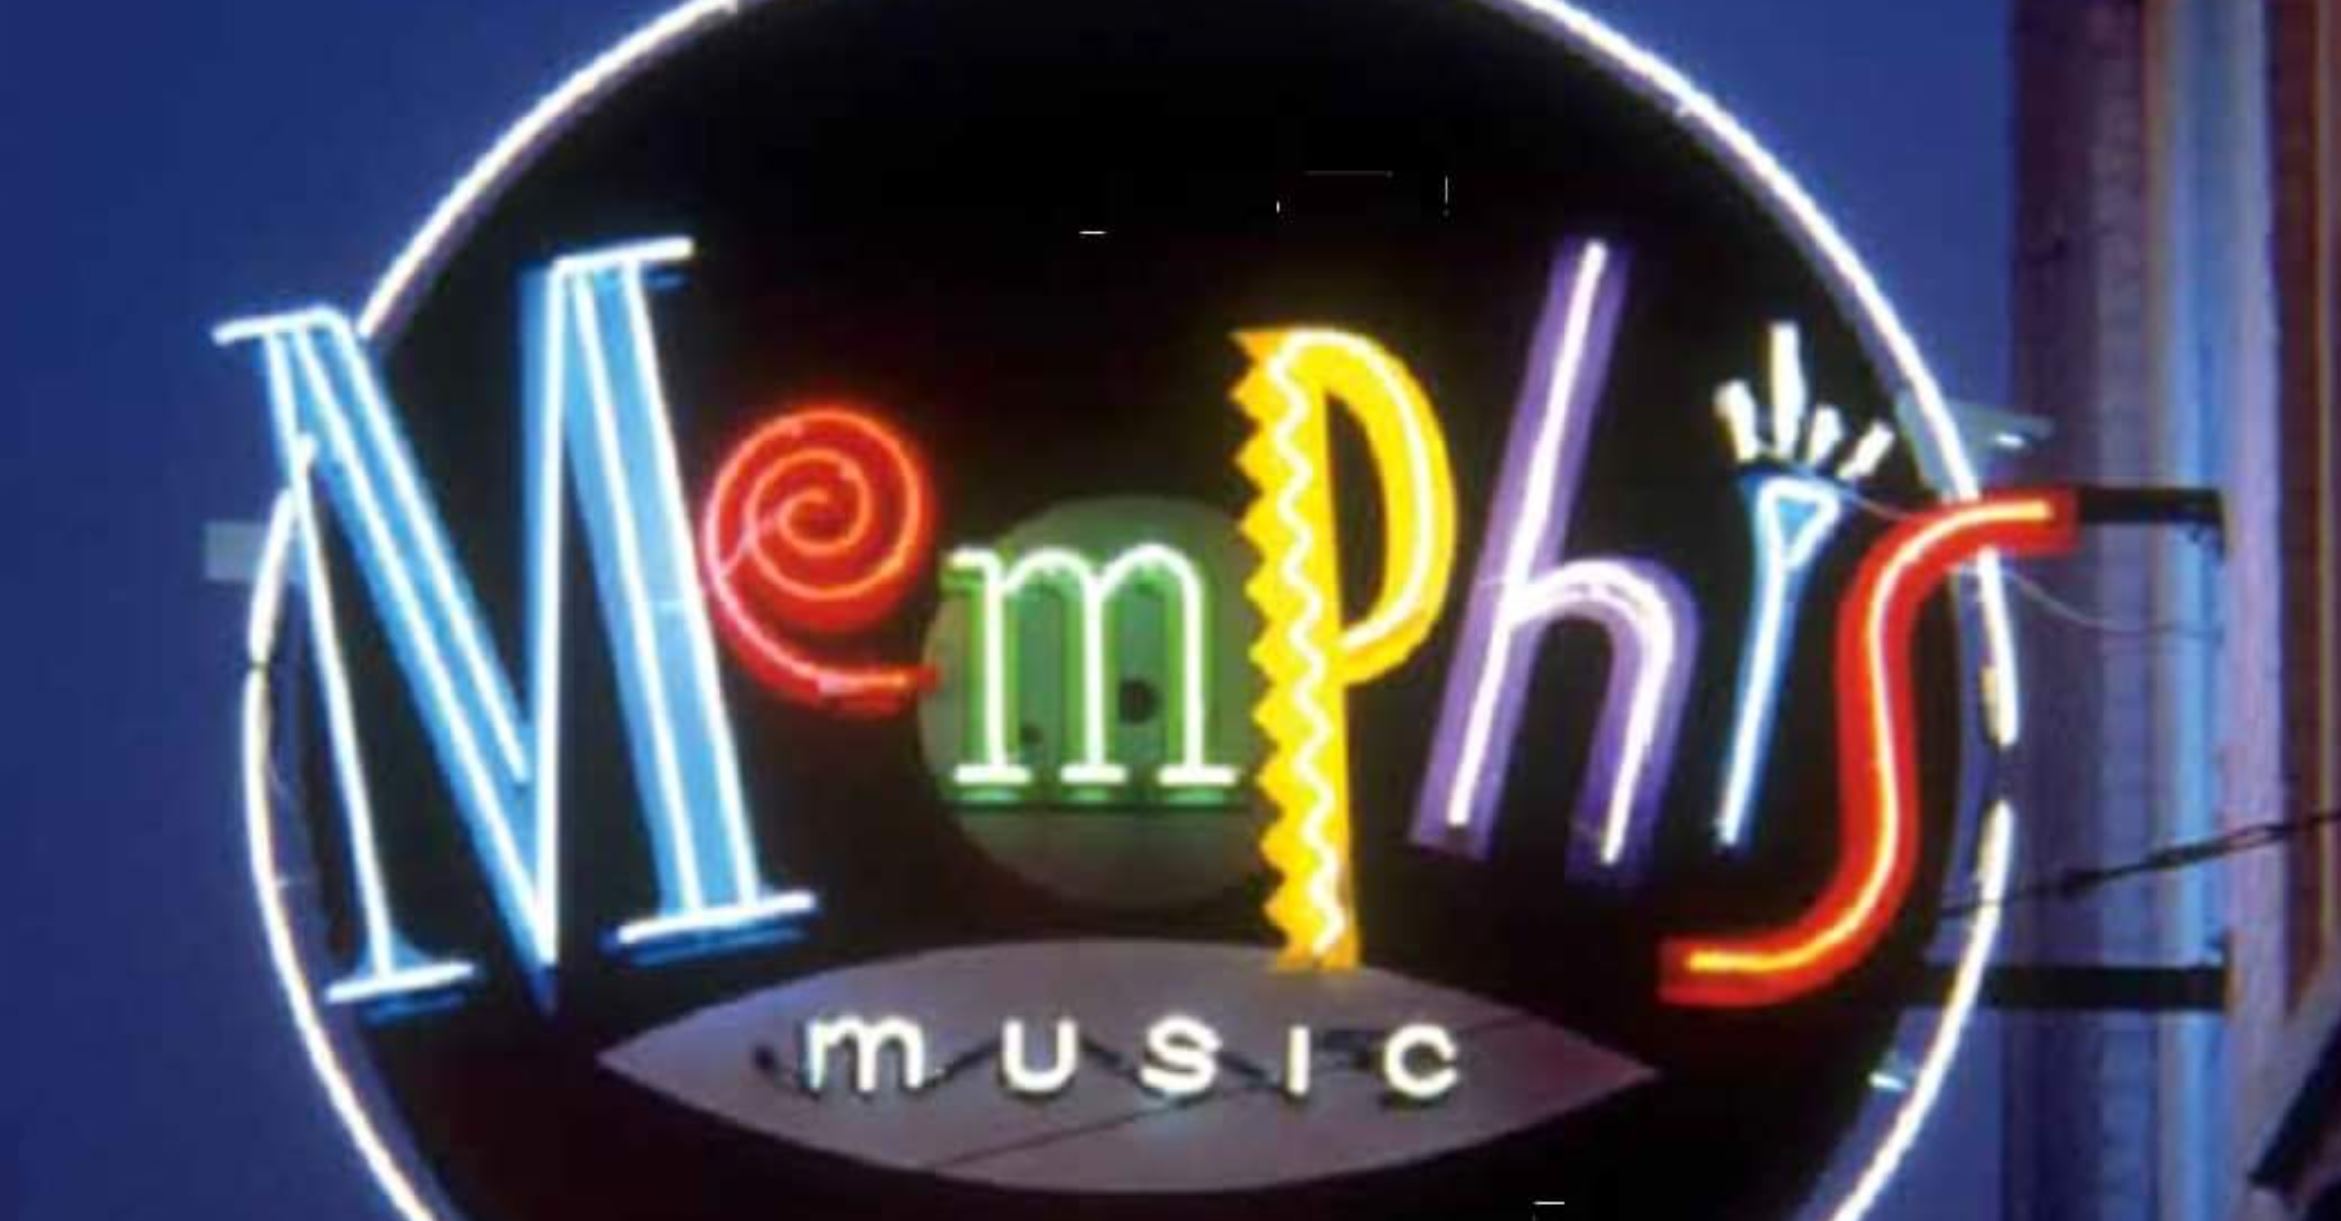 memphismusic logo